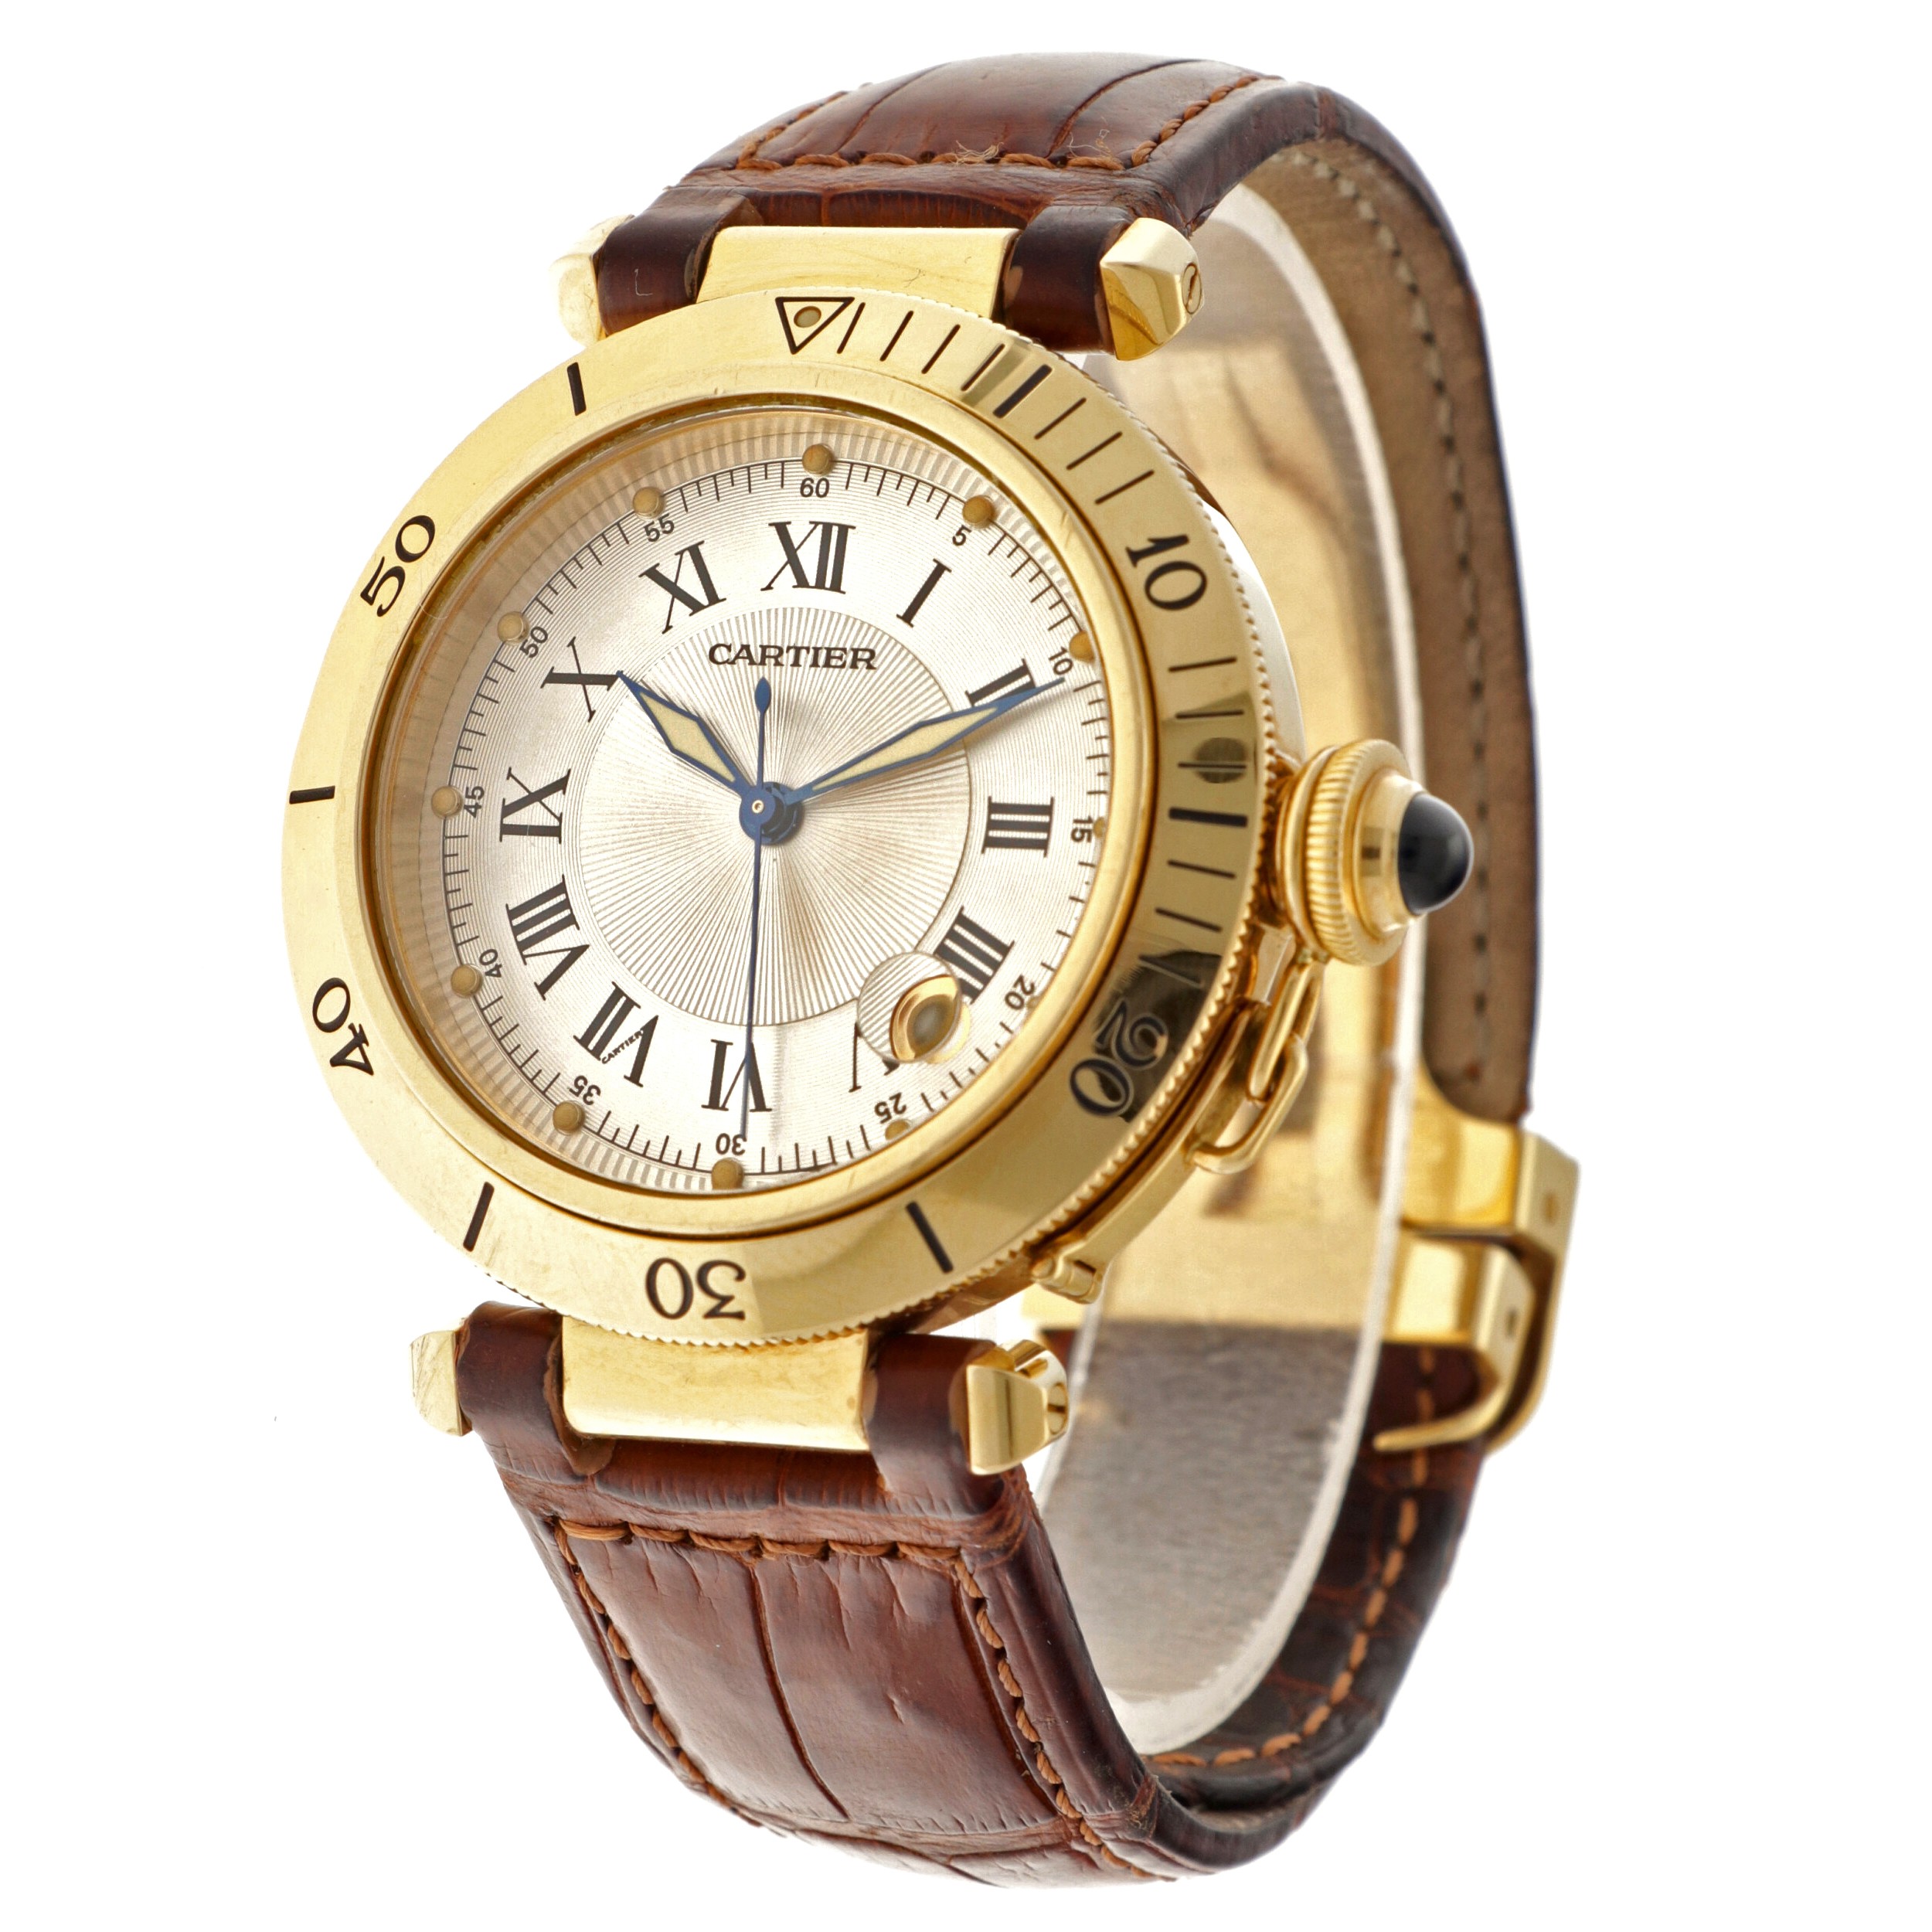 No Reserve - Cartier Pasha 18K. 1027 - Men's watch. - Image 2 of 6